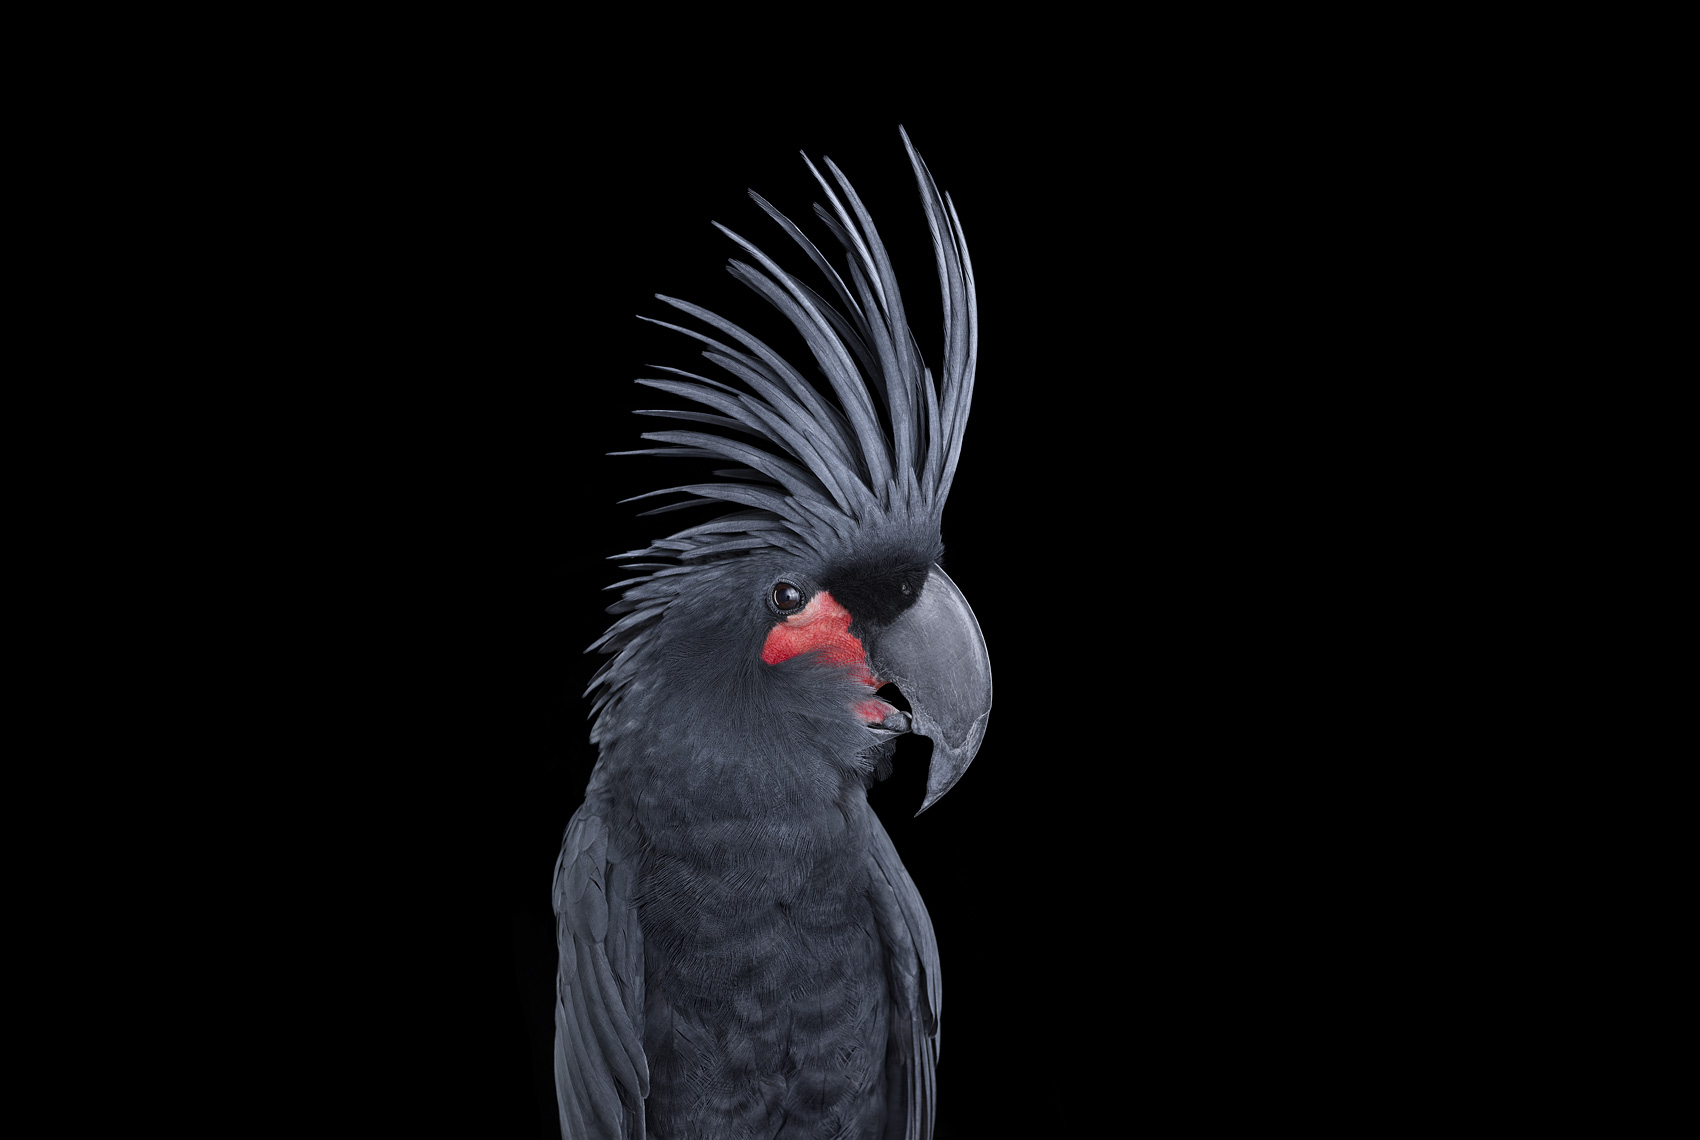 Palm cockatoo studio portrait by fine art wildlife photographer Brad Wilson